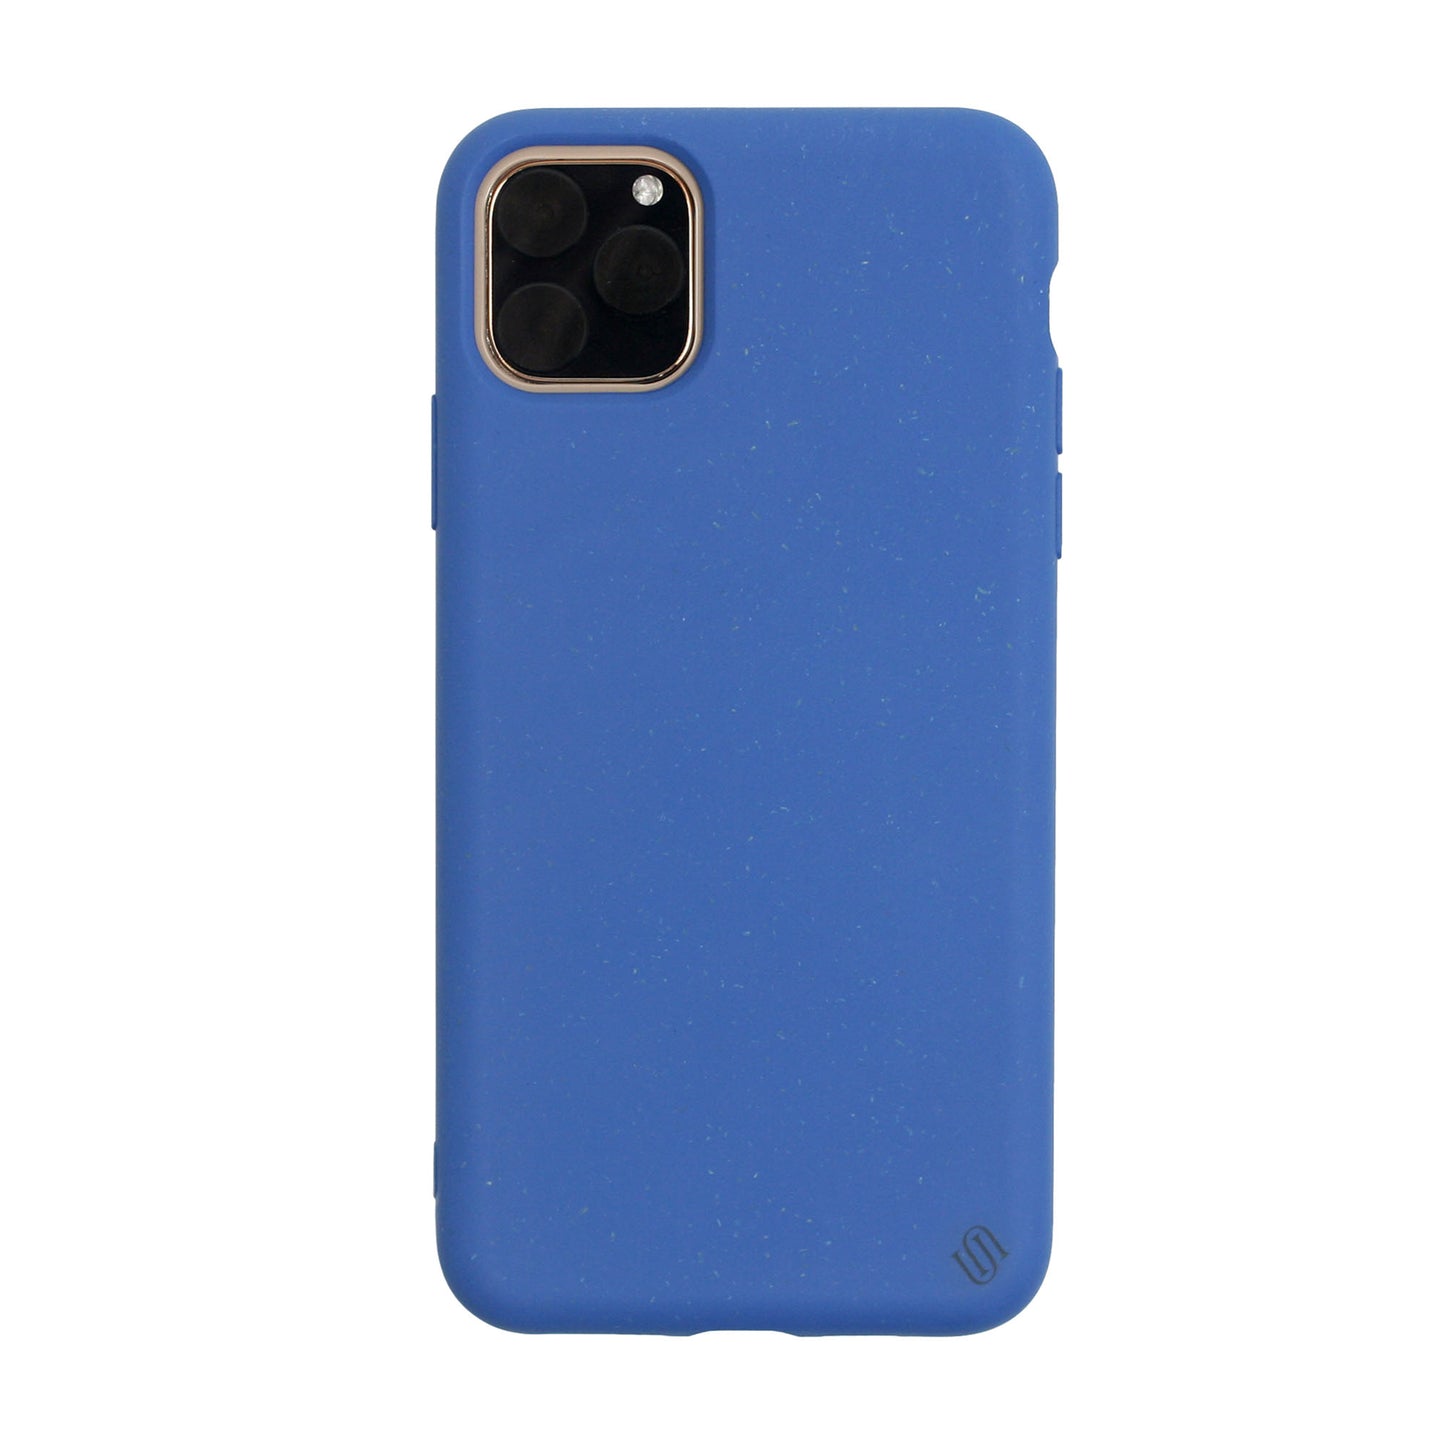 iPhone 11 Pro Uunique Blue (Blueberry) Nutrisiti Eco Back Case - 15-05023